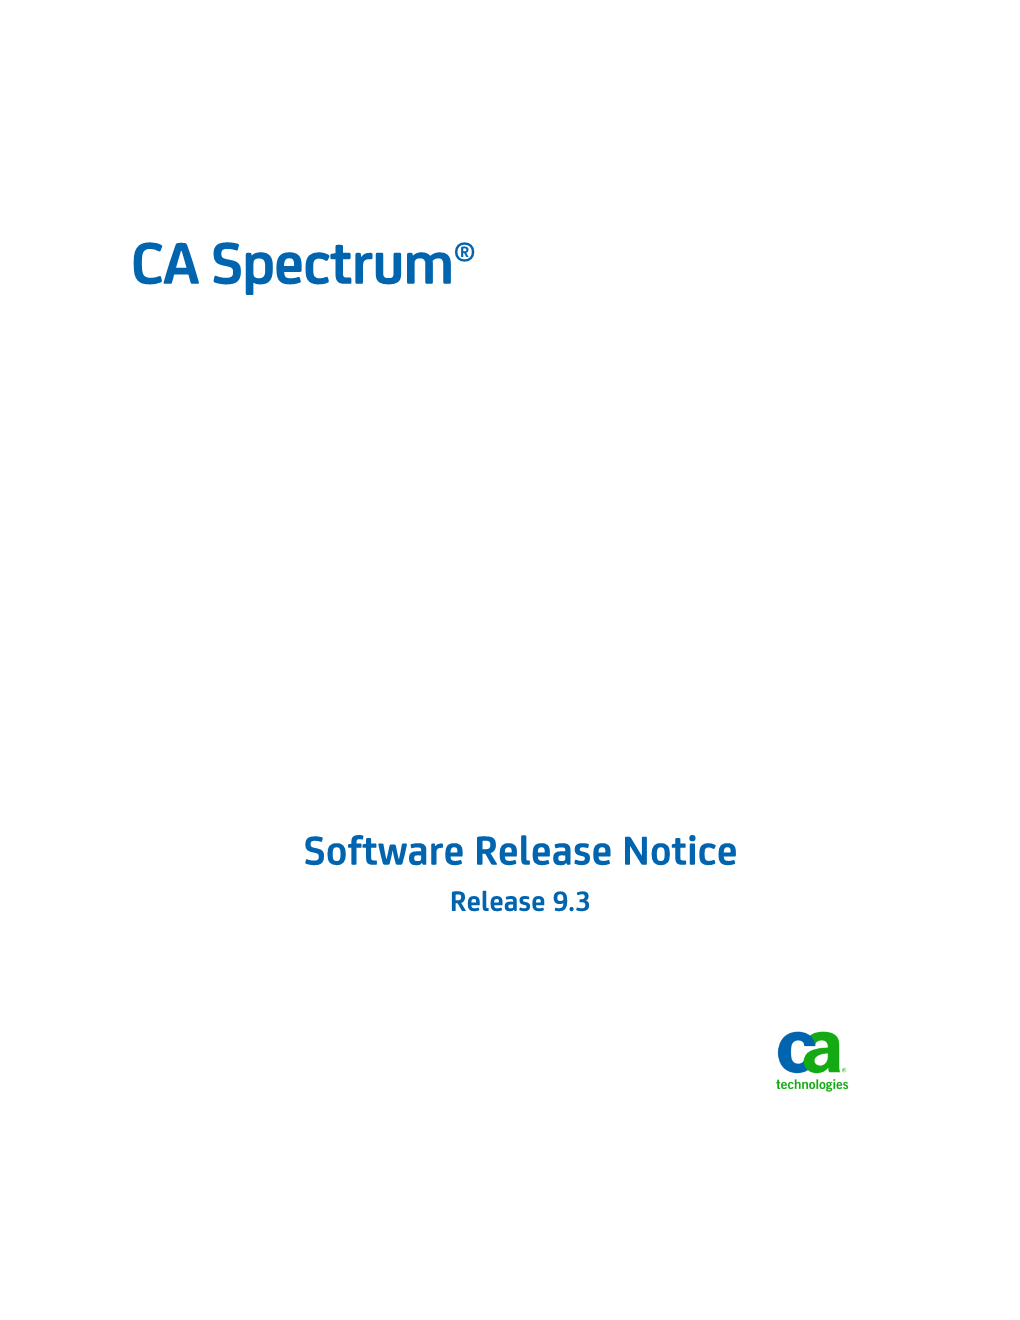 CA Spectrum Software Release Notice (CA Spectrum SRN) Is Included in the CA Spectrum Installation Package